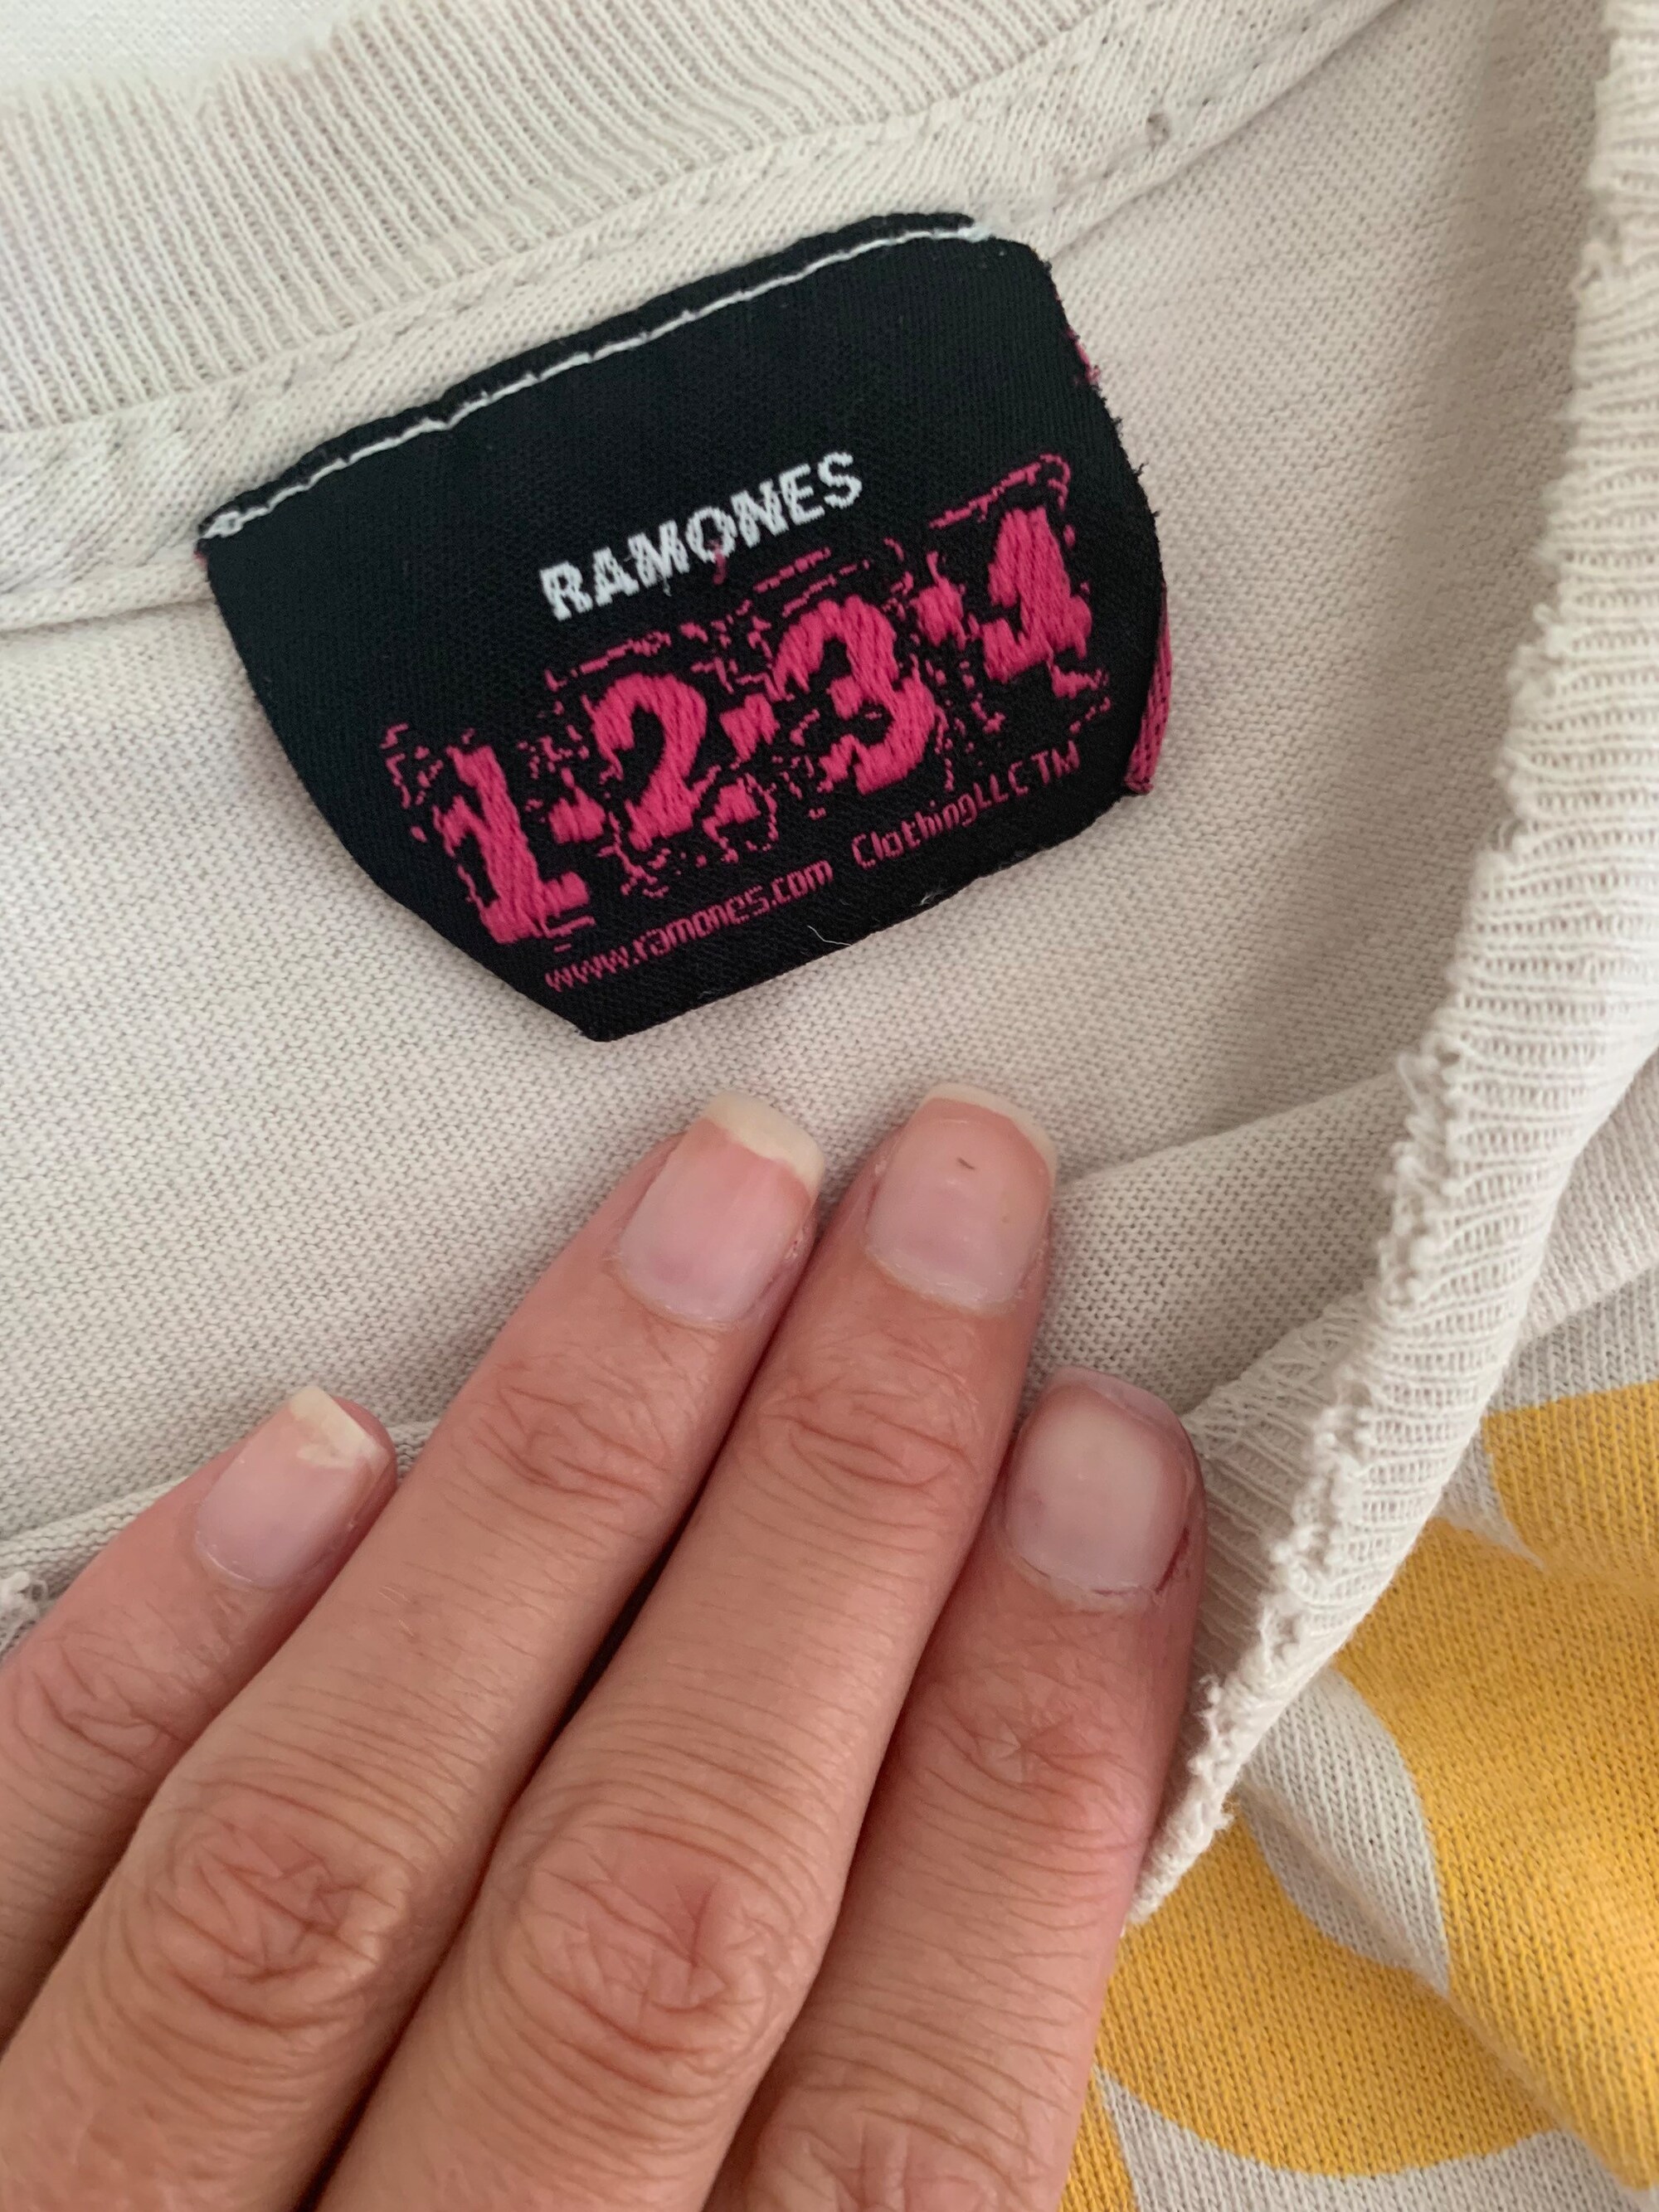 Discover Ramones T-Shirt, Punk rock T-Shirt, Band T-Shirt